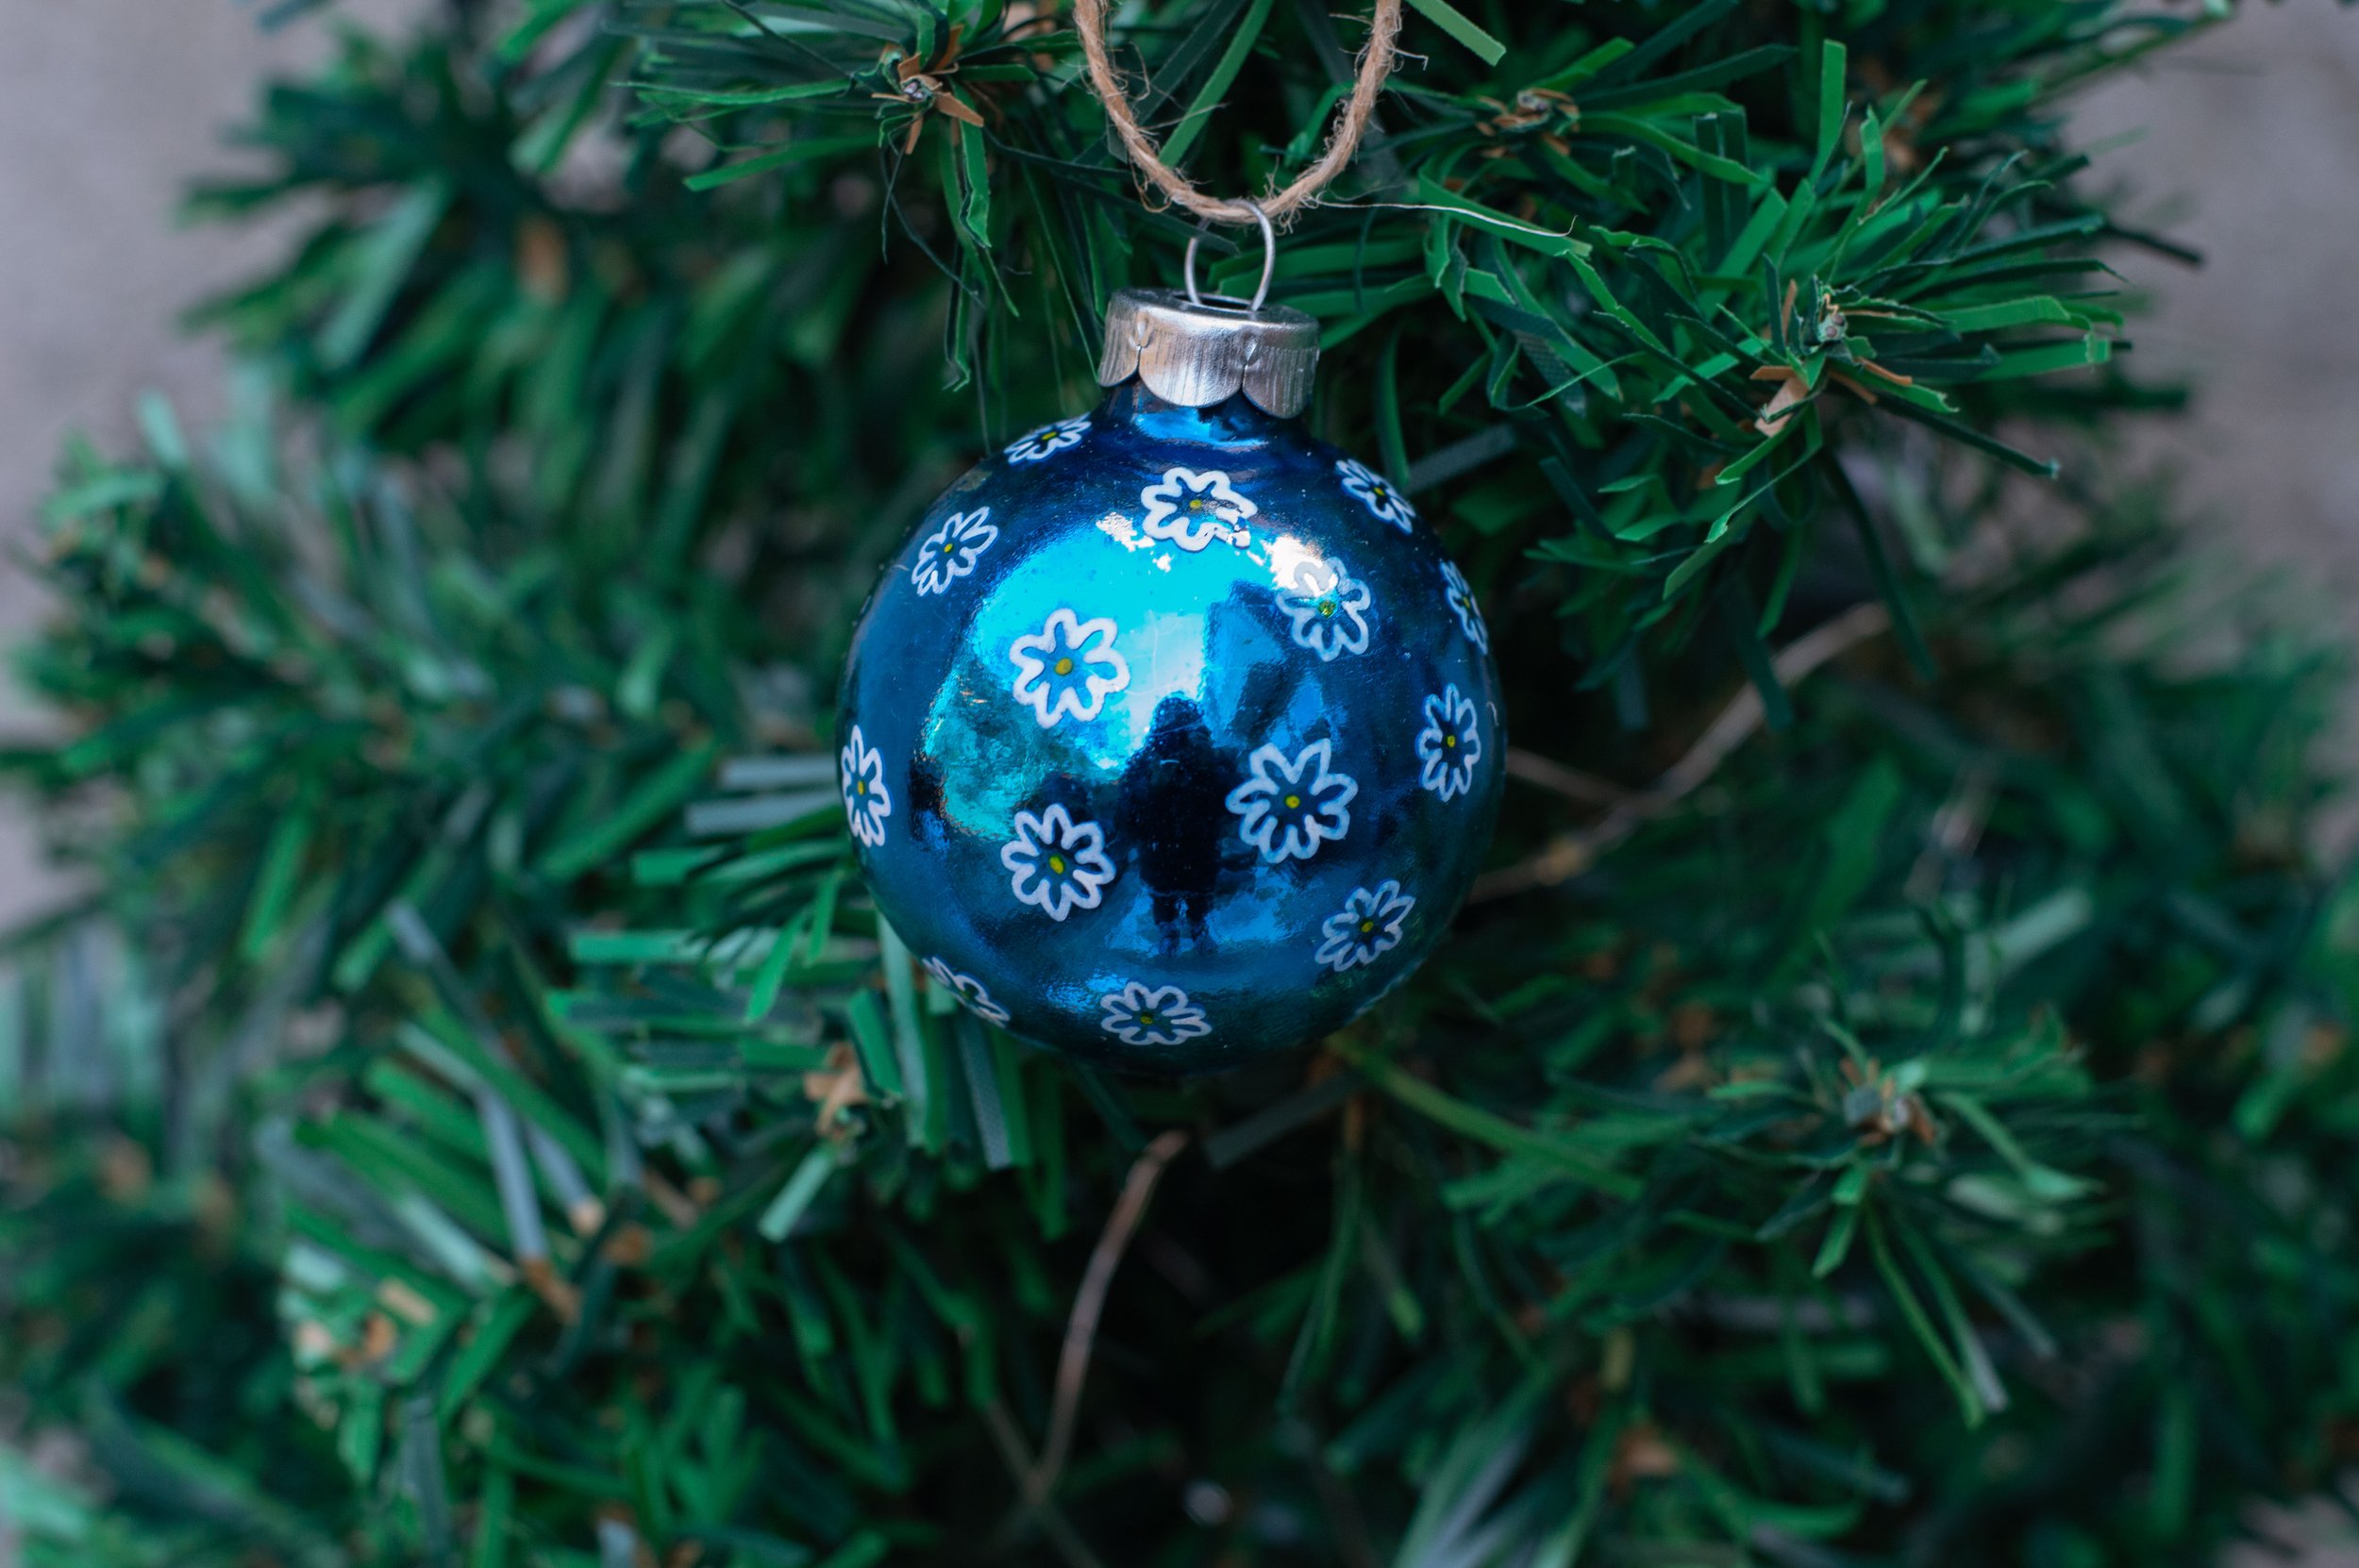 Hand Painted Christmas Ornament Green Blue Silver | Sugar Creek Home Decor